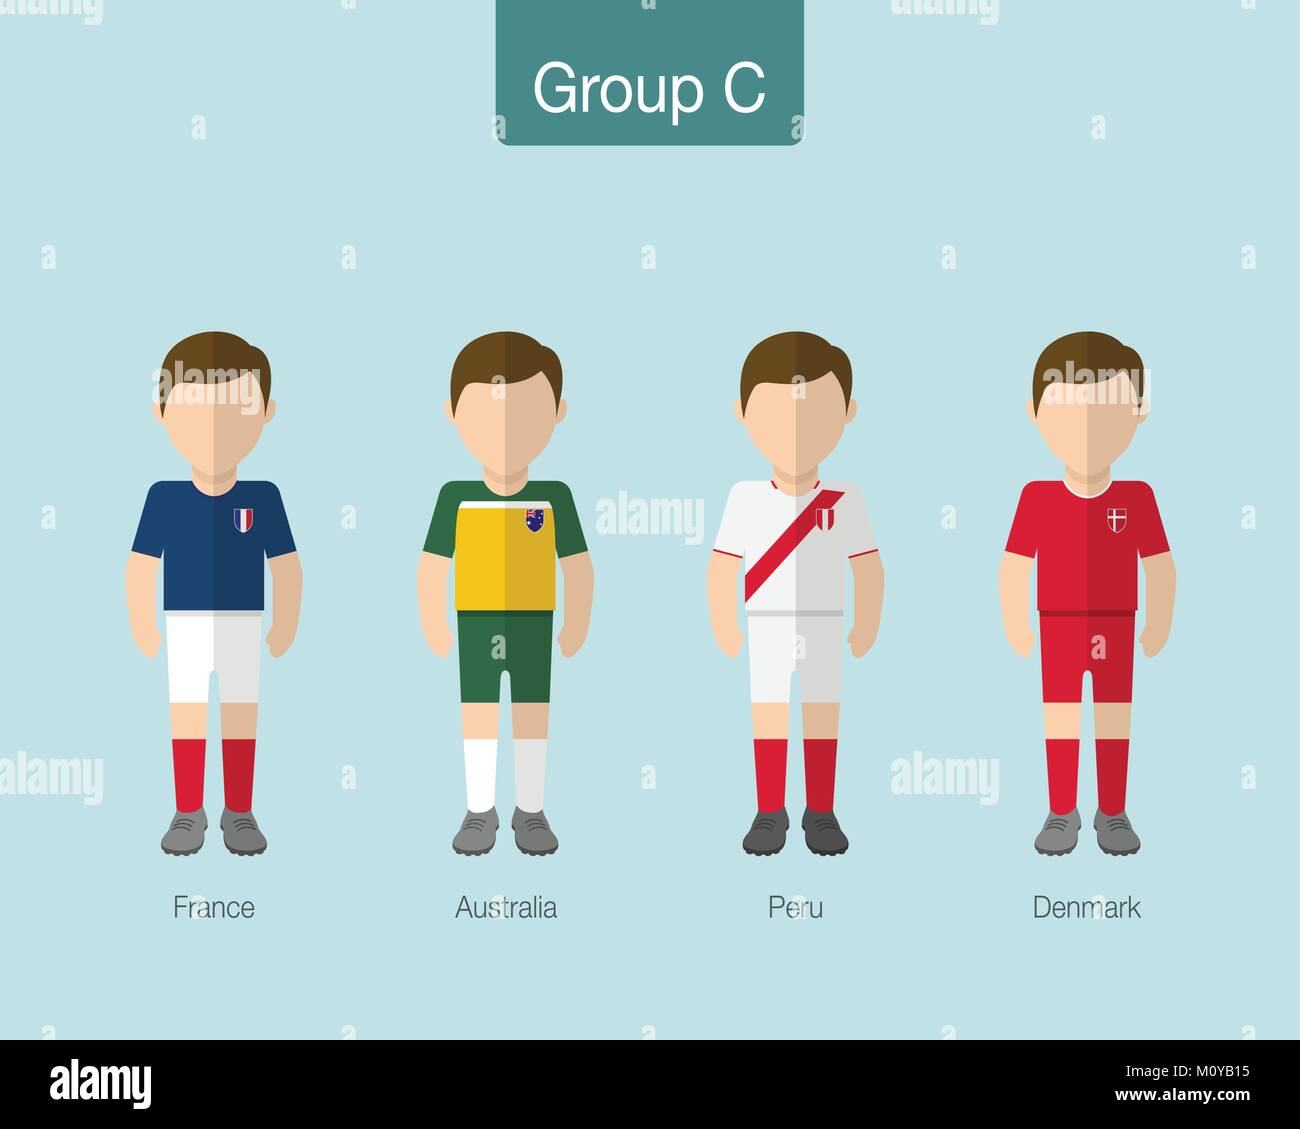 2018 Soccer or football team uniform. Group C with FRANCE, AUSTRALIA, PERU, DENMARK. Flat design. Vector illustration. Stock Vector